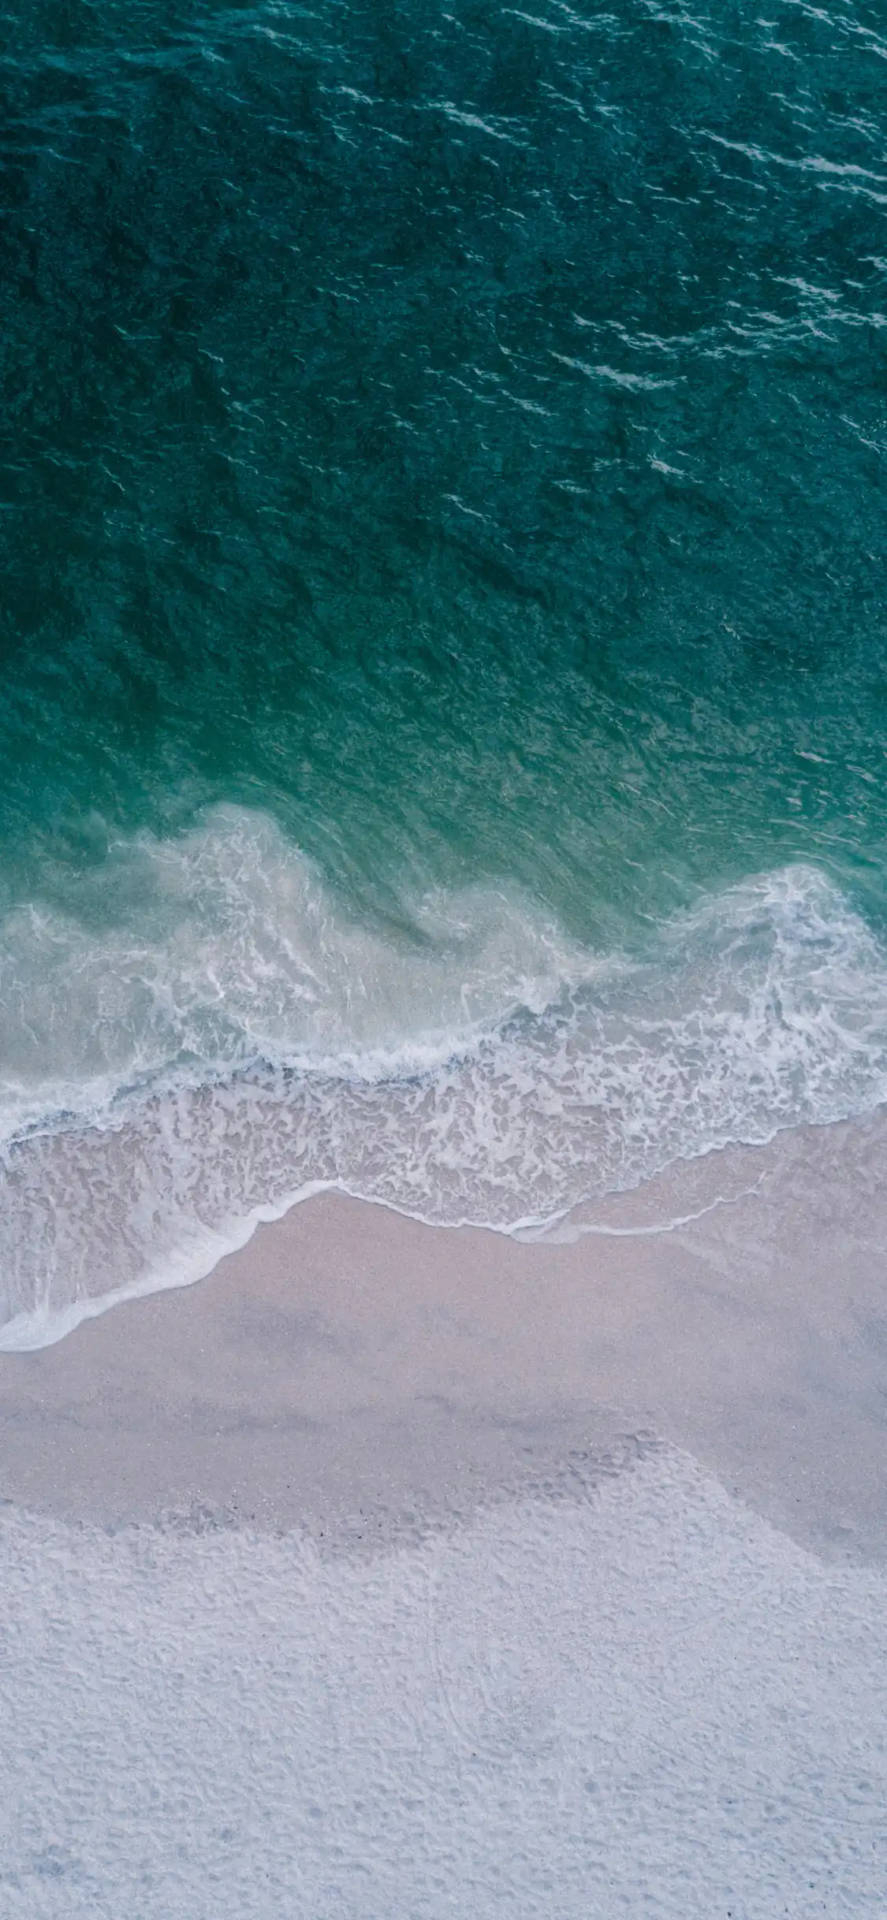 iPhone X Beach Calm Waves Wallpaper